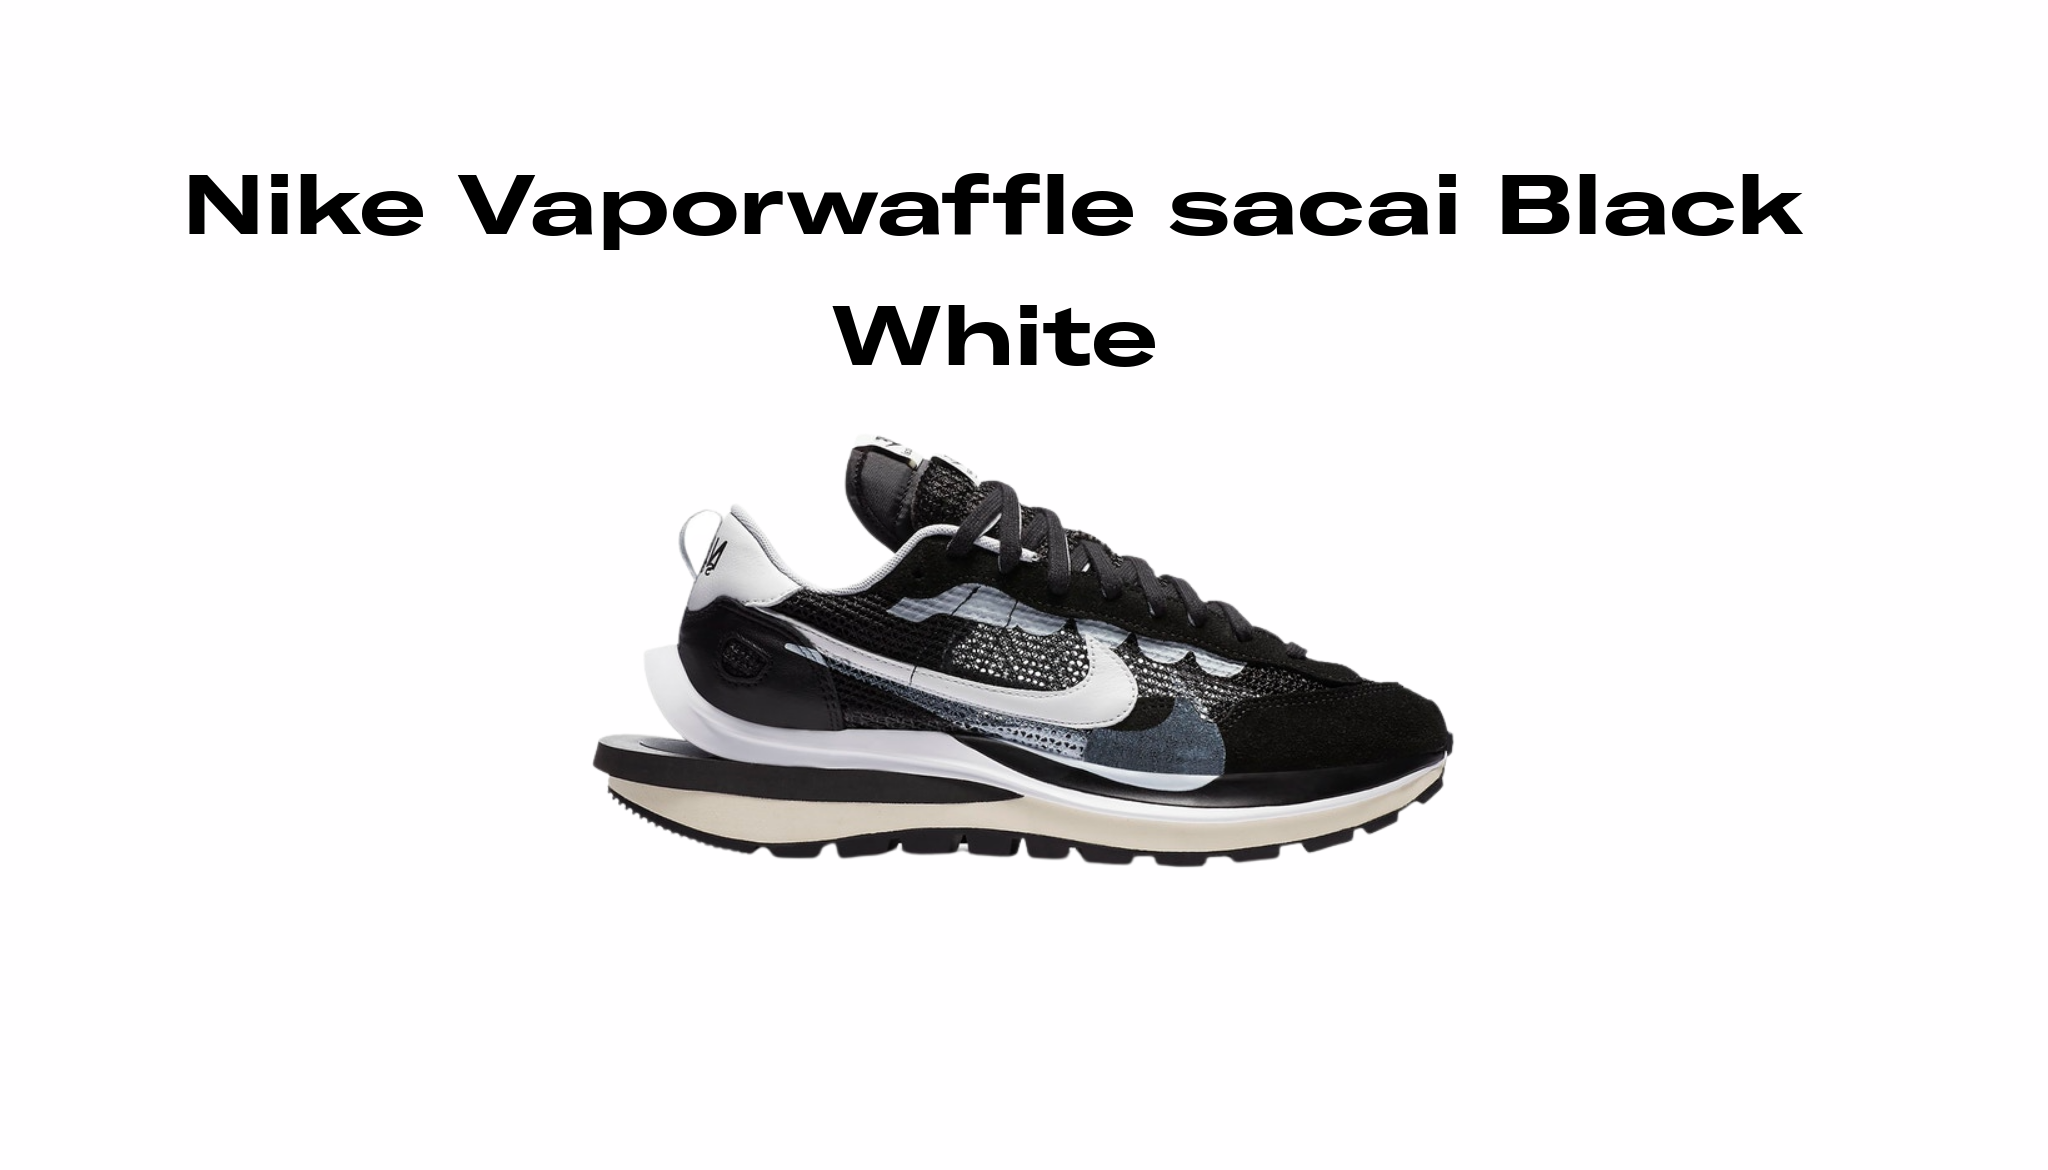 Nike Vaporwaffle vapor waffle black sacai Black White, Raffles and Release Date